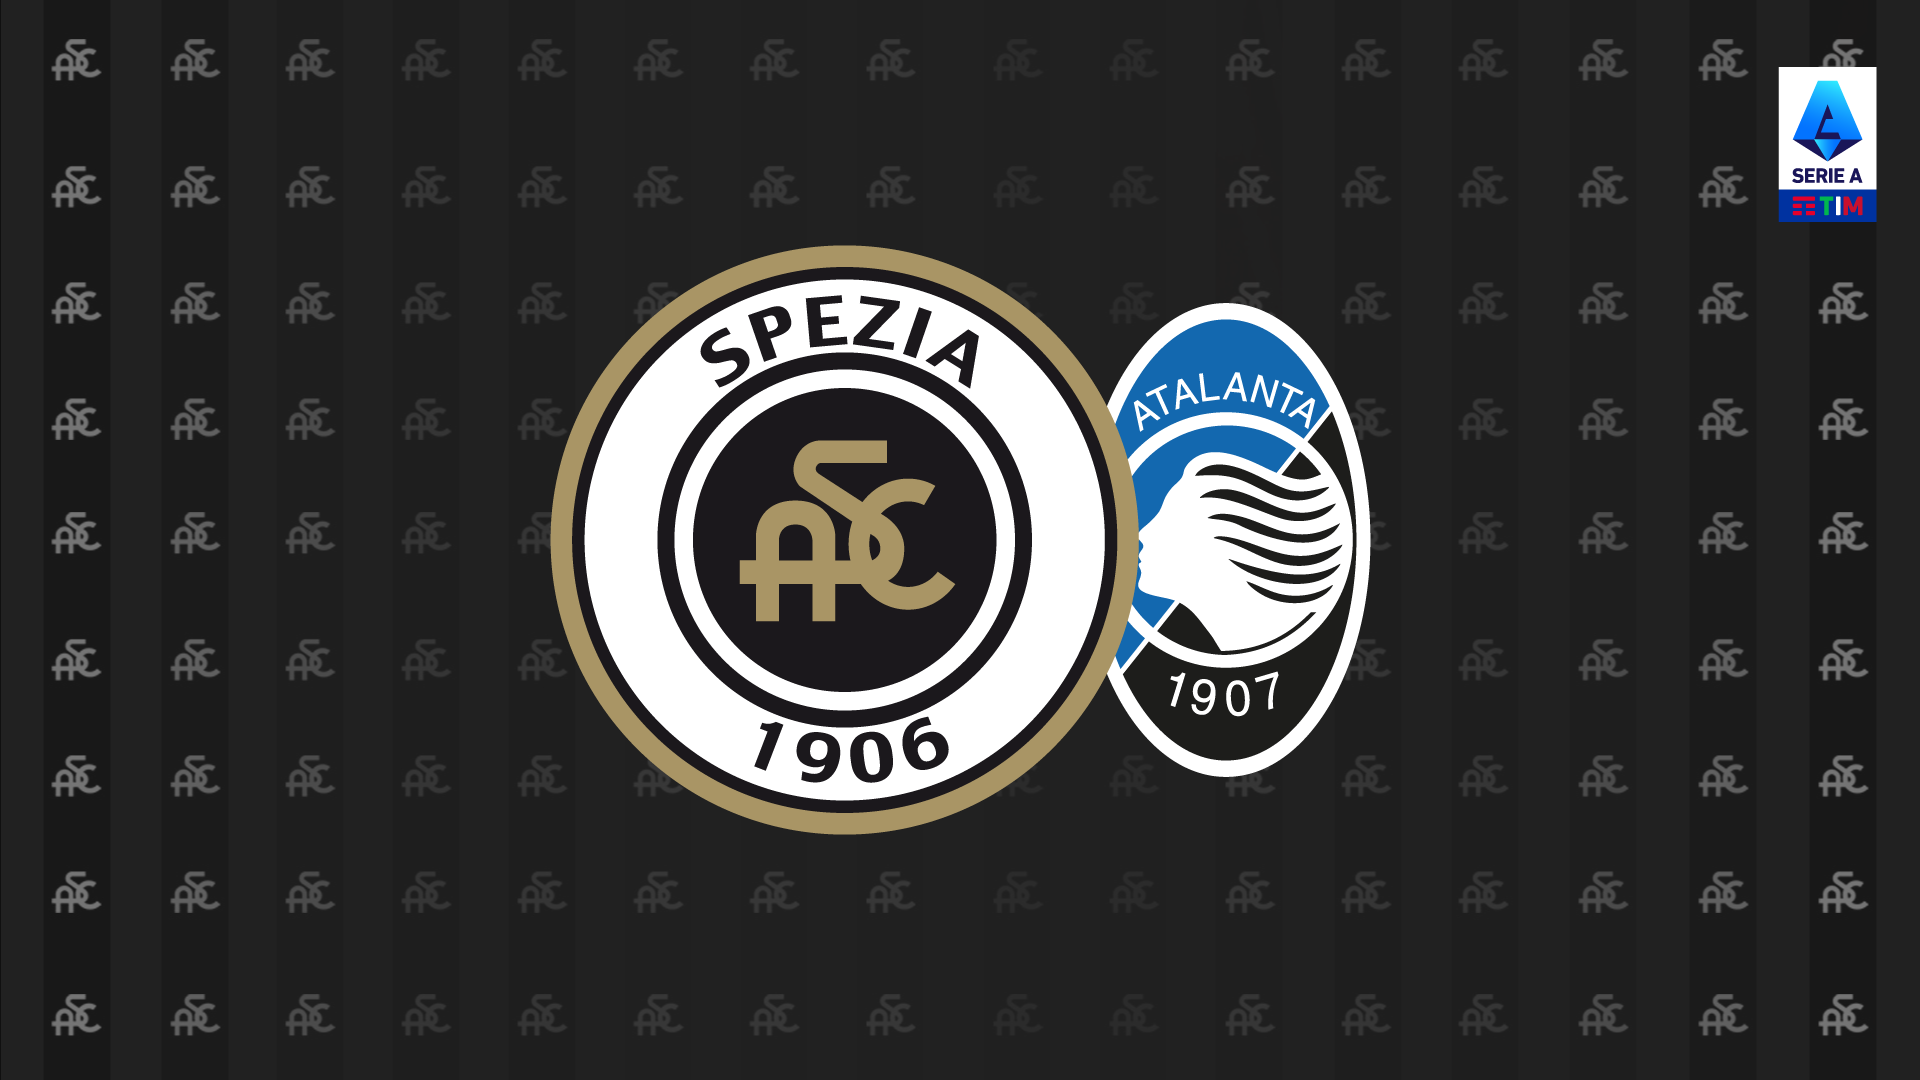 Serie A TIM 21/22: Spezia-Atalanta